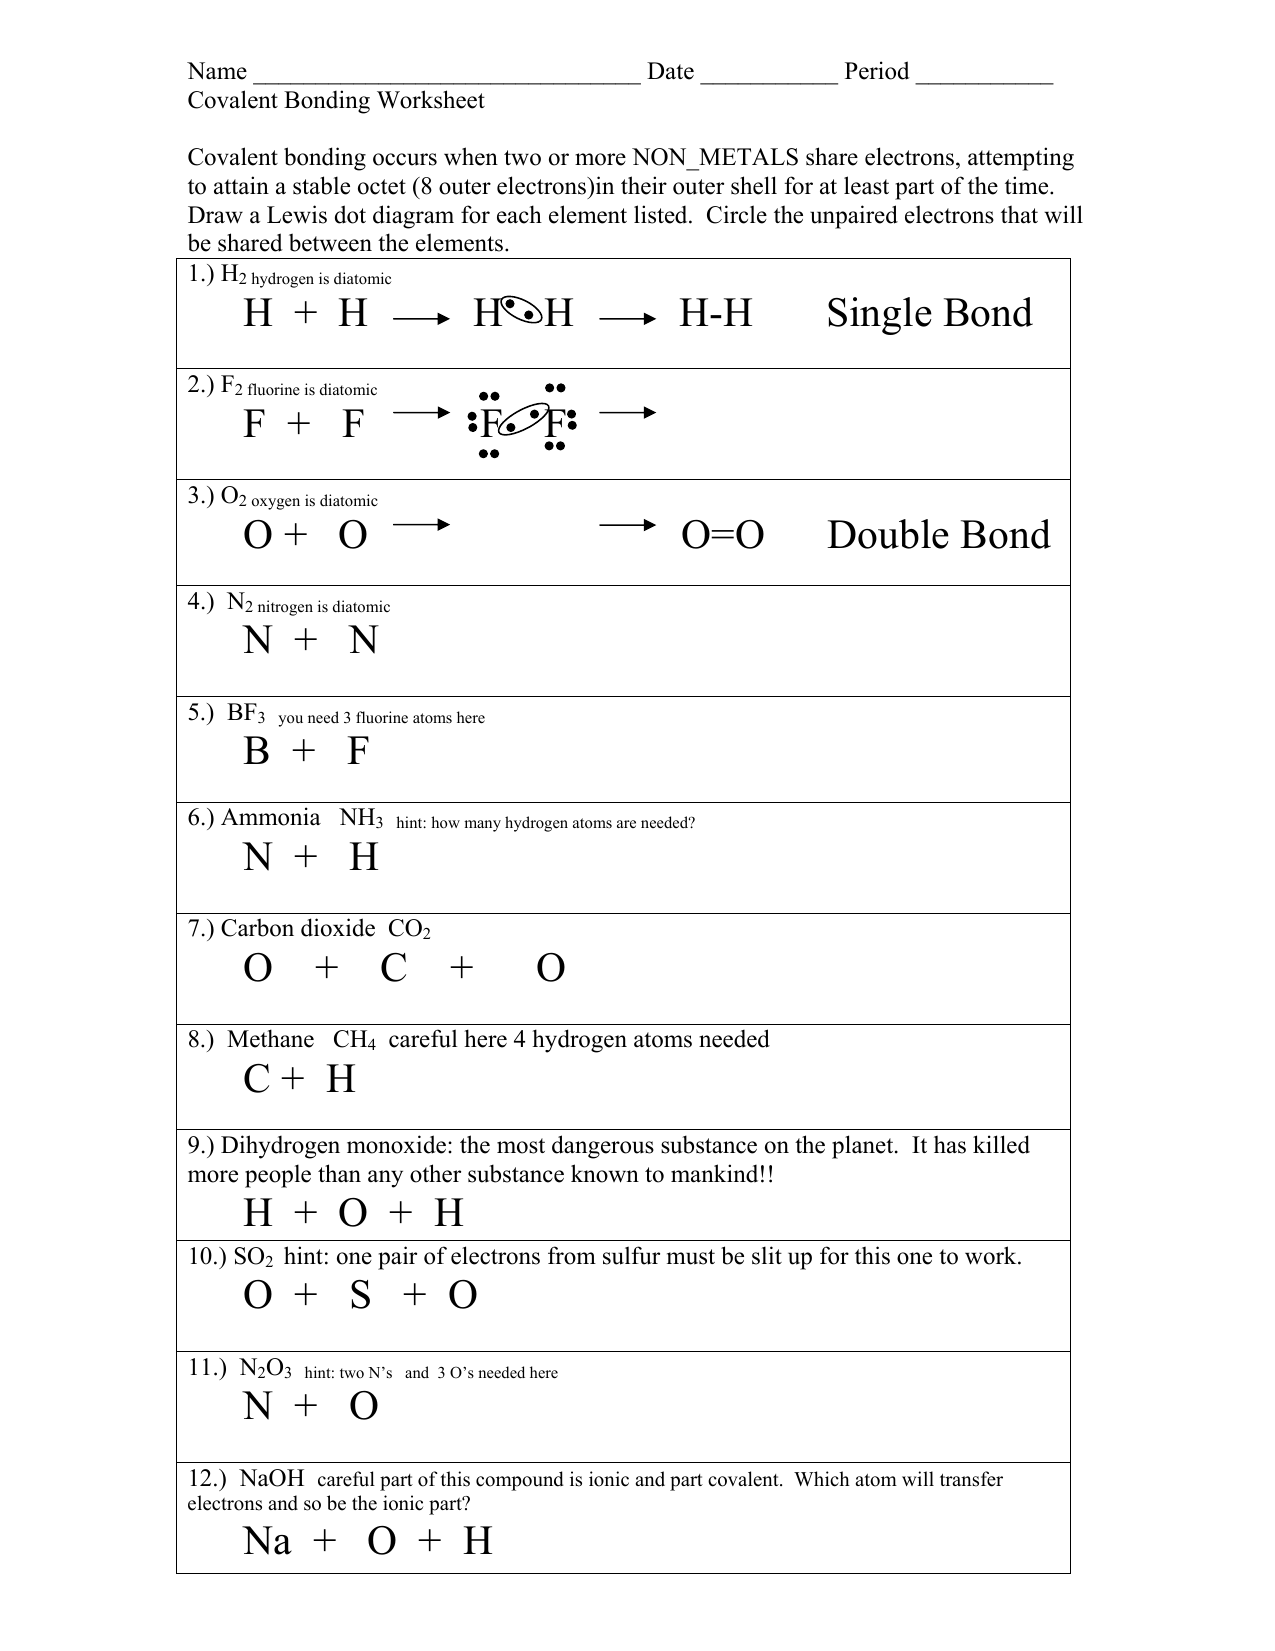 PDF chemical bonding example problems Chemical Bonds PDF  PDFprof.com In Chemical Bonding Worksheet Key